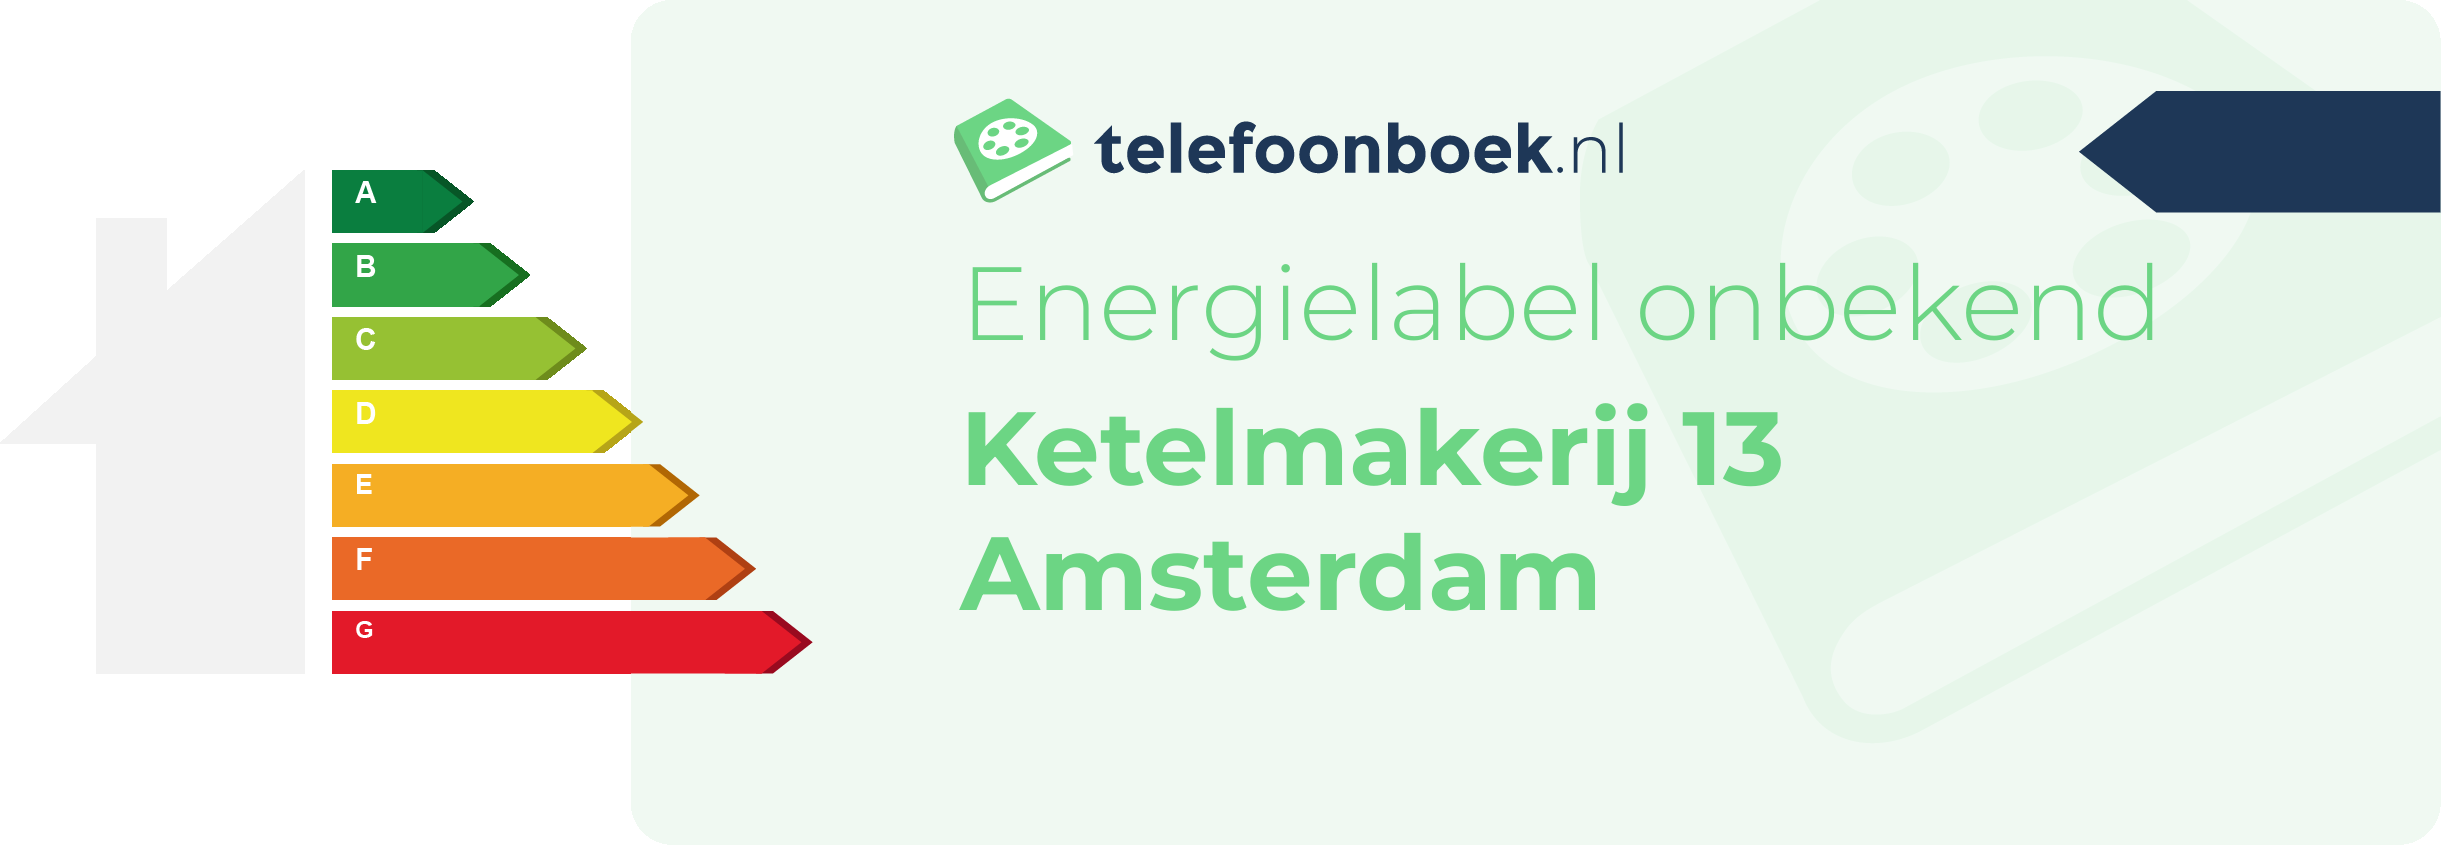 Energielabel Ketelmakerij 13 Amsterdam